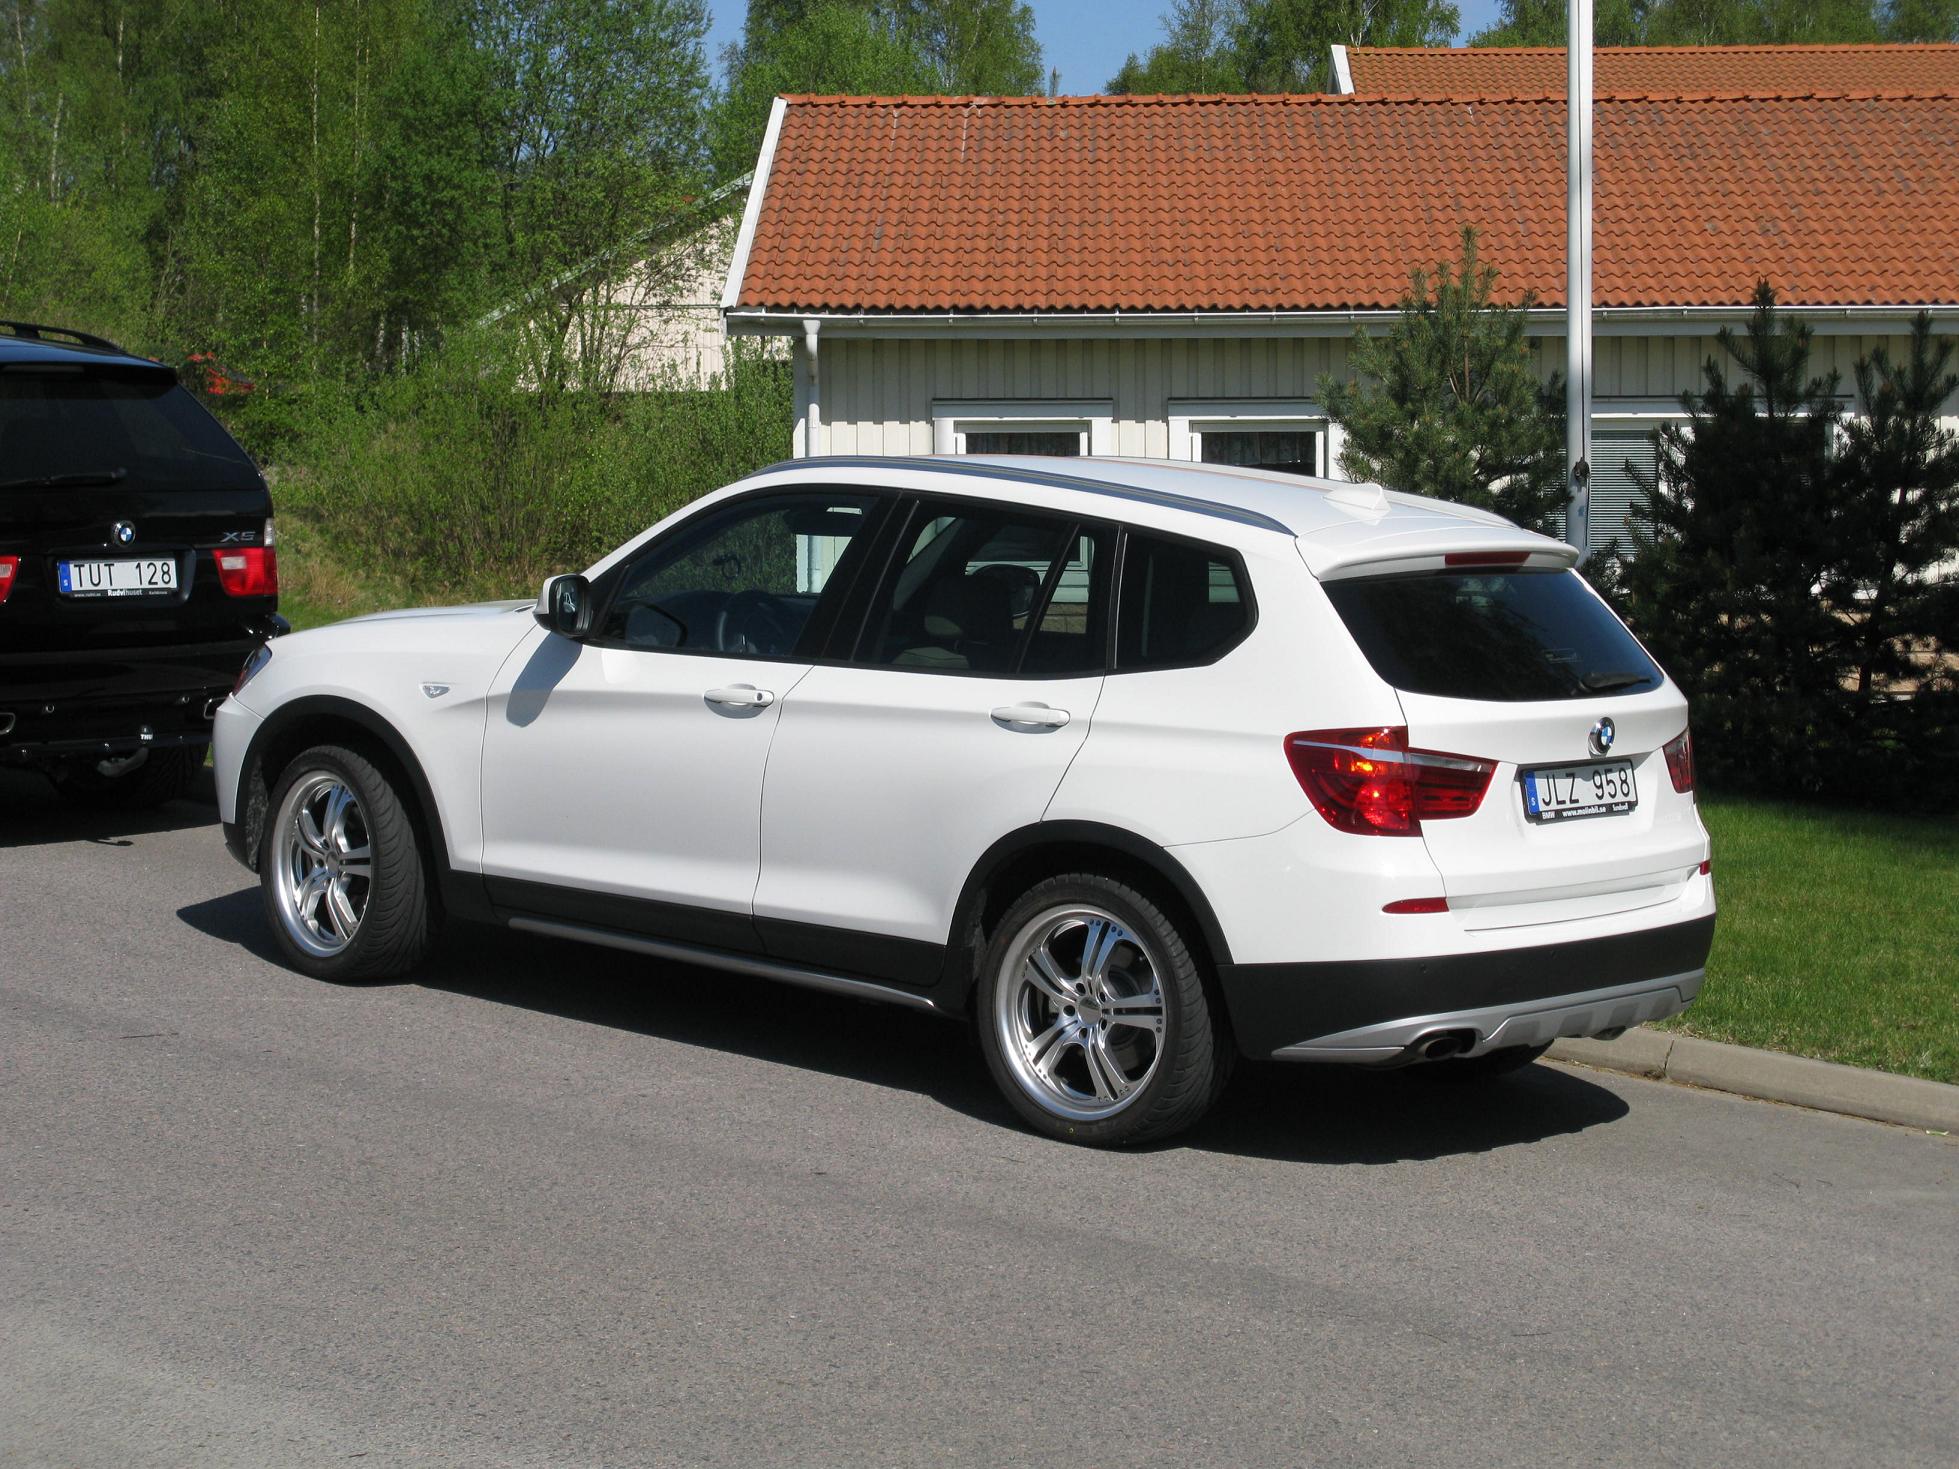 BMW X3 | Flickr - Photo Sharing!